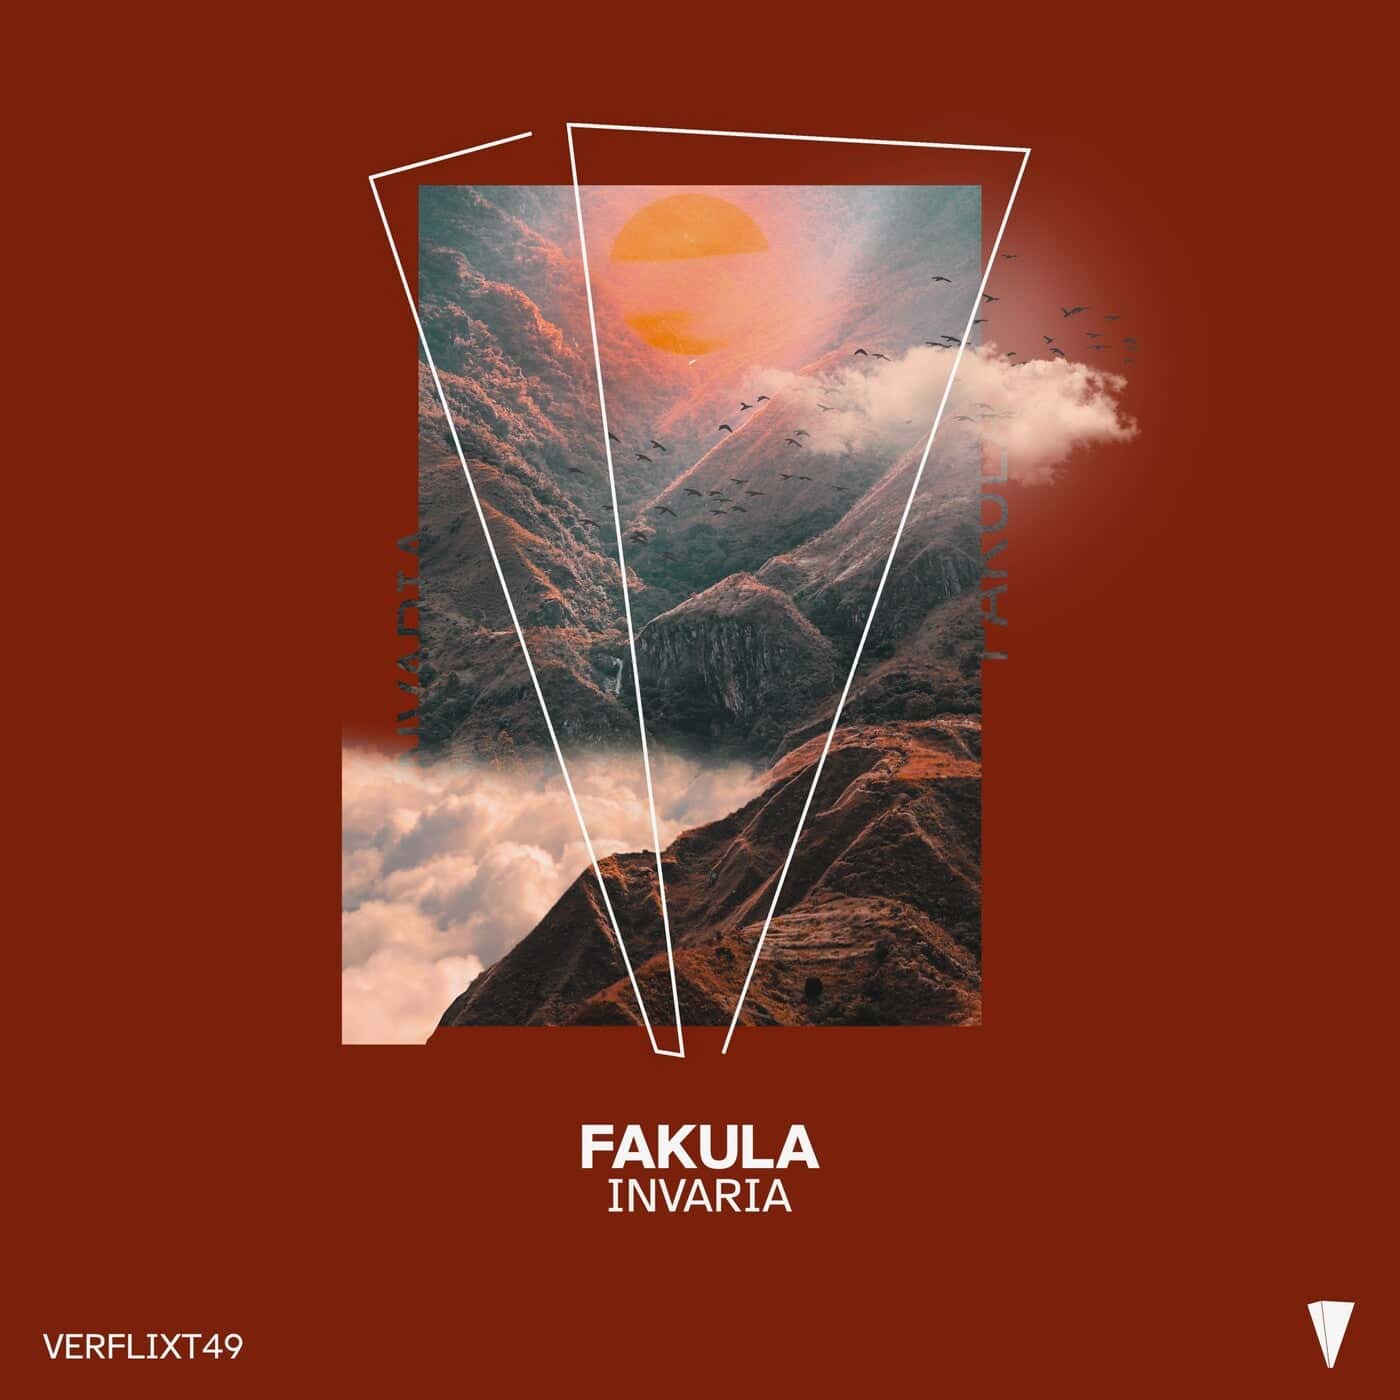 image cover: Invaria - Fakula (Original Mix) / VERFLIXT49